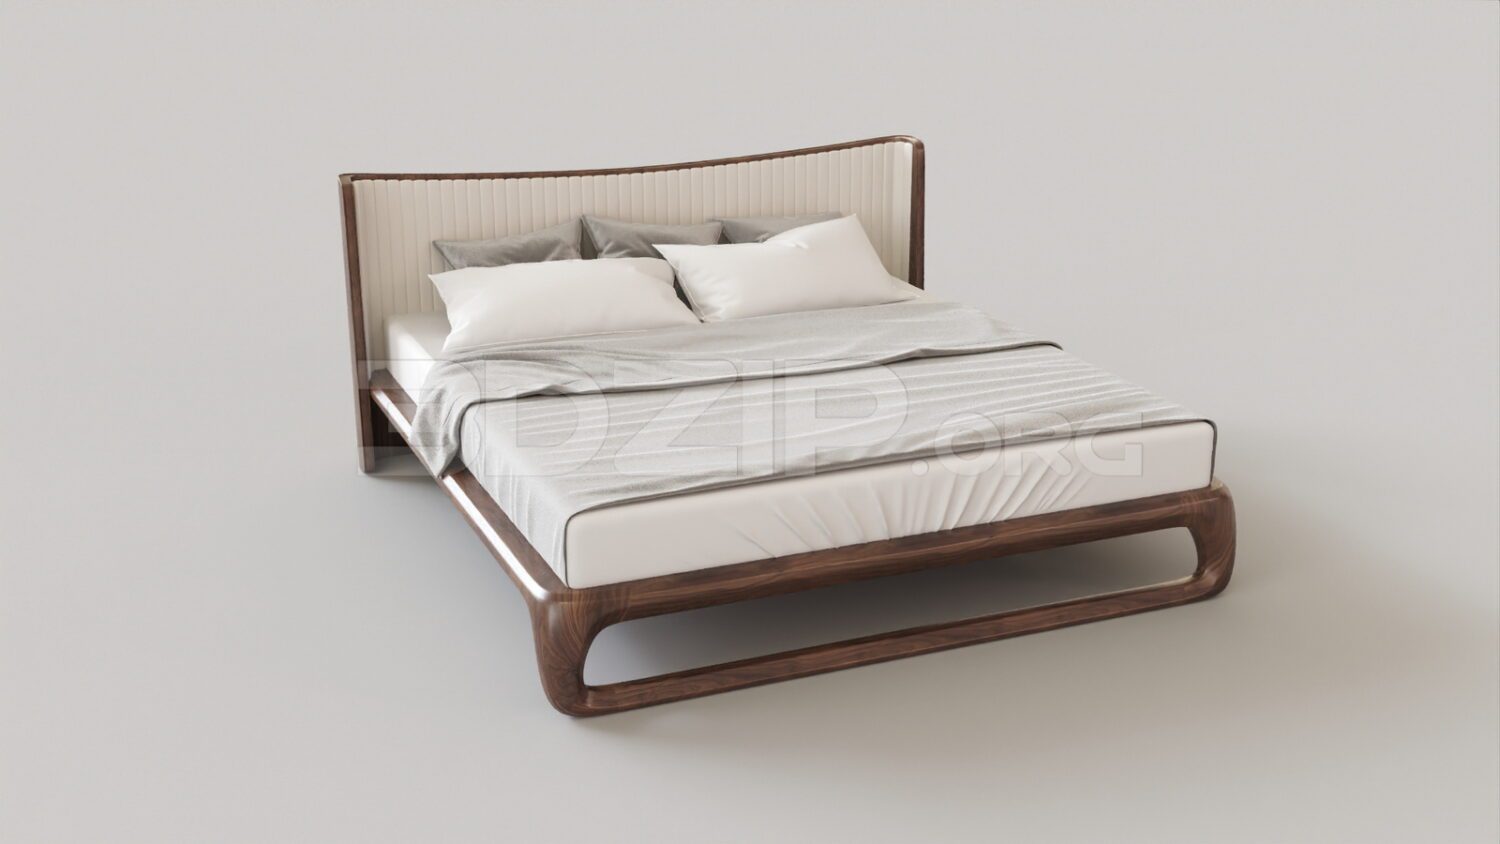 4889. Free 3D Bed Model Download